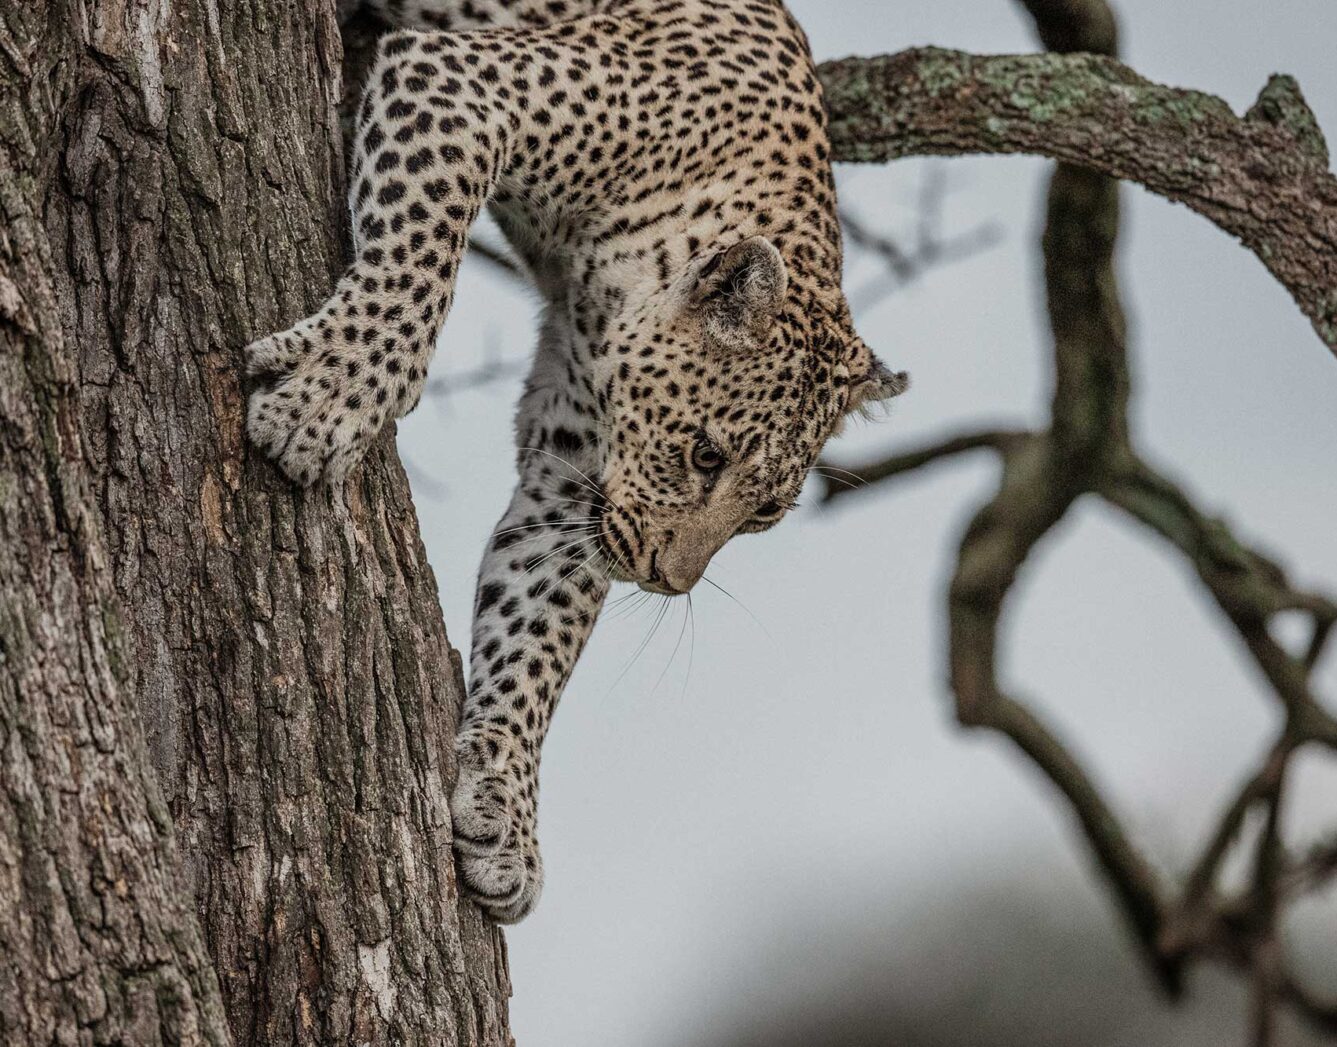 A leopard climbs down a tree